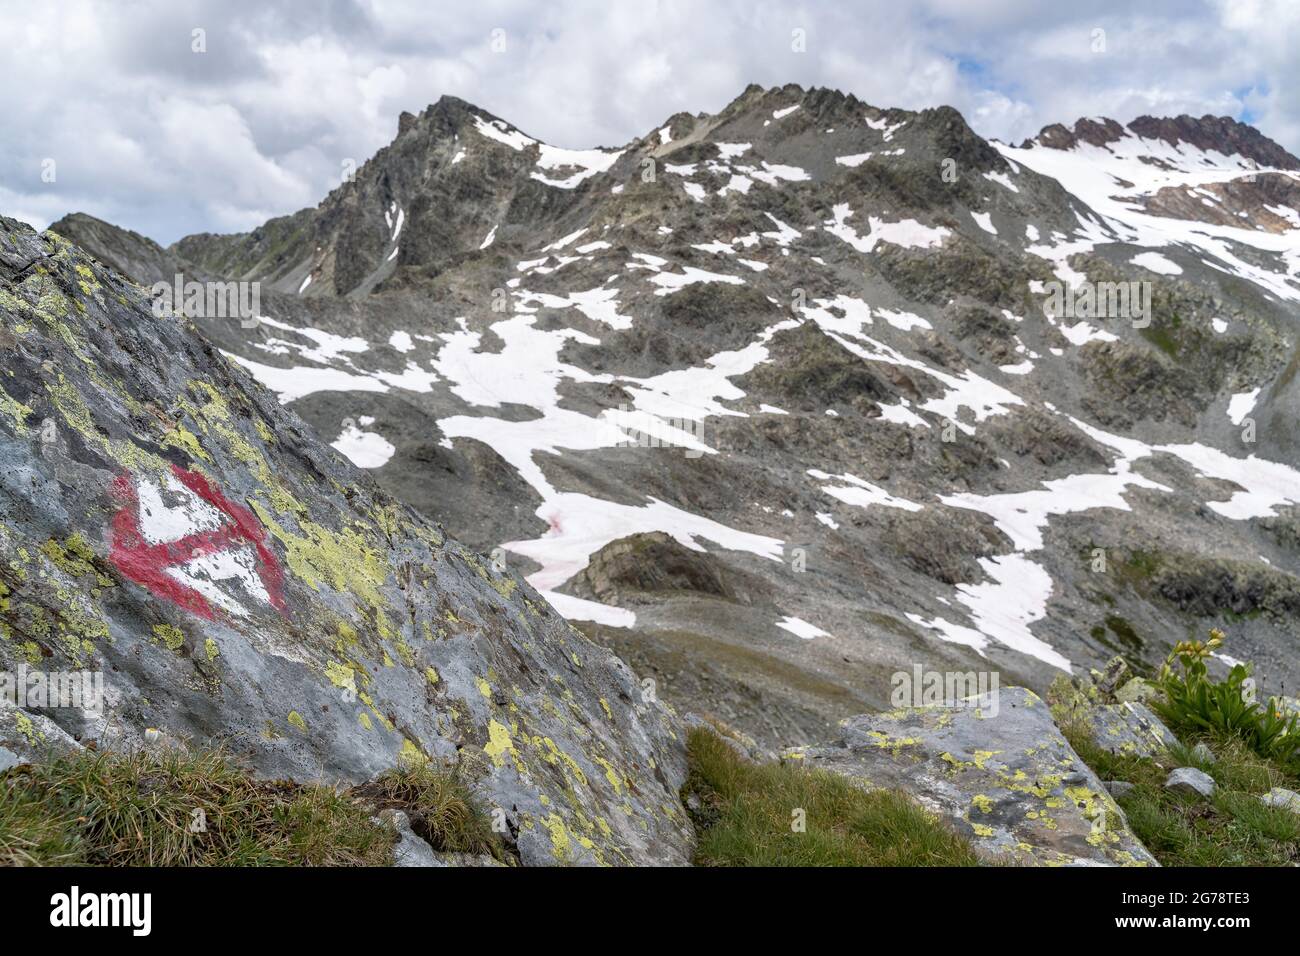 Europa, Austria, Tirol, Verwall, Paznaun, Galtür, Friedrichshafener Hut, camino que marca en la colina rocosa caminata en el Georg-Prasser-Weg Foto de stock